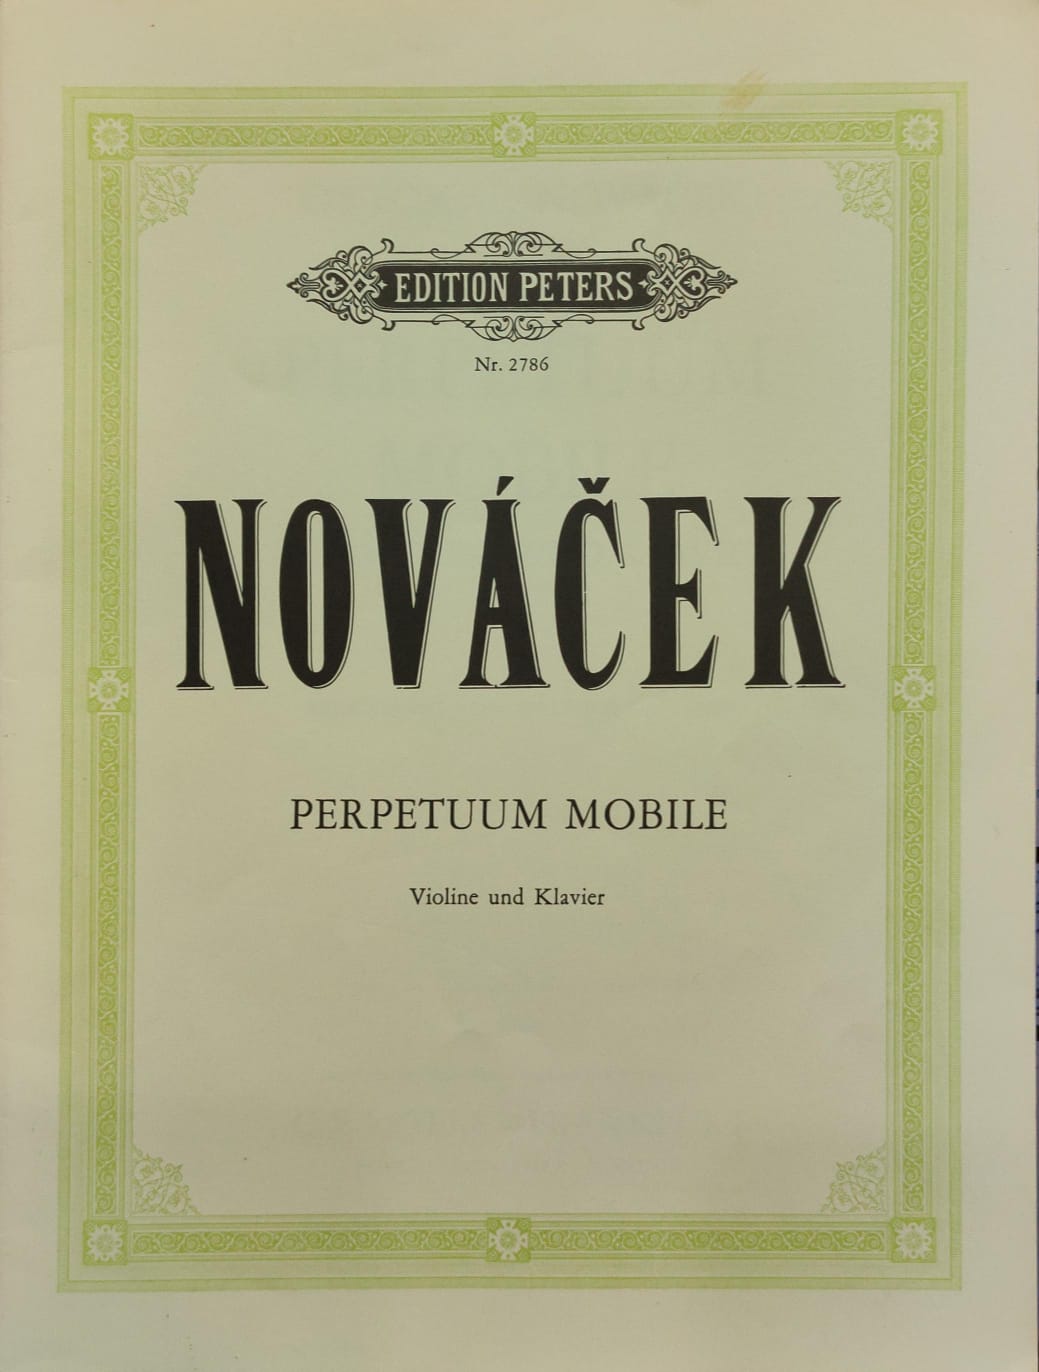 Ottokar Novacek: Perpetuum mobile